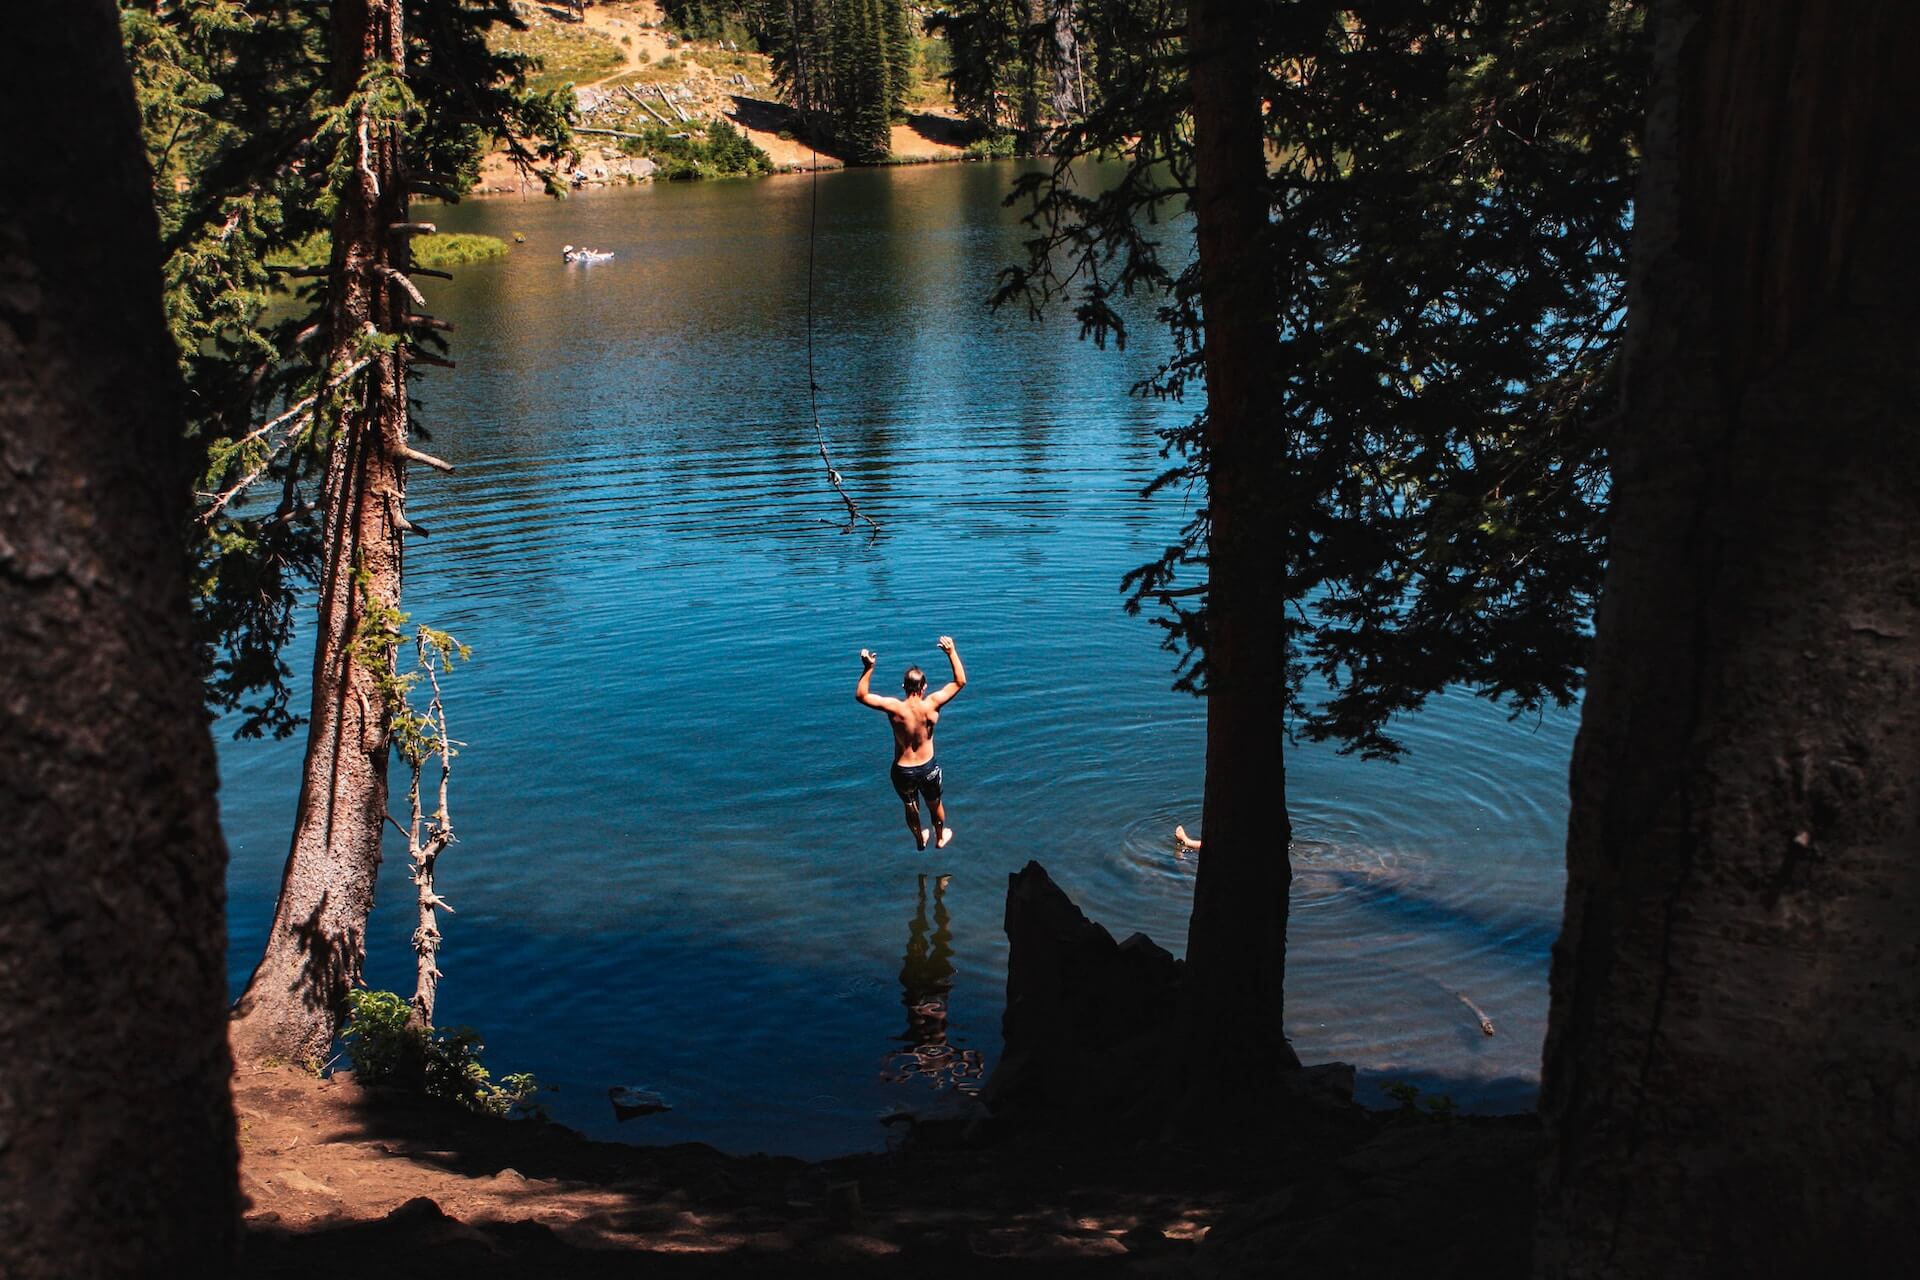 guy swinging into lake